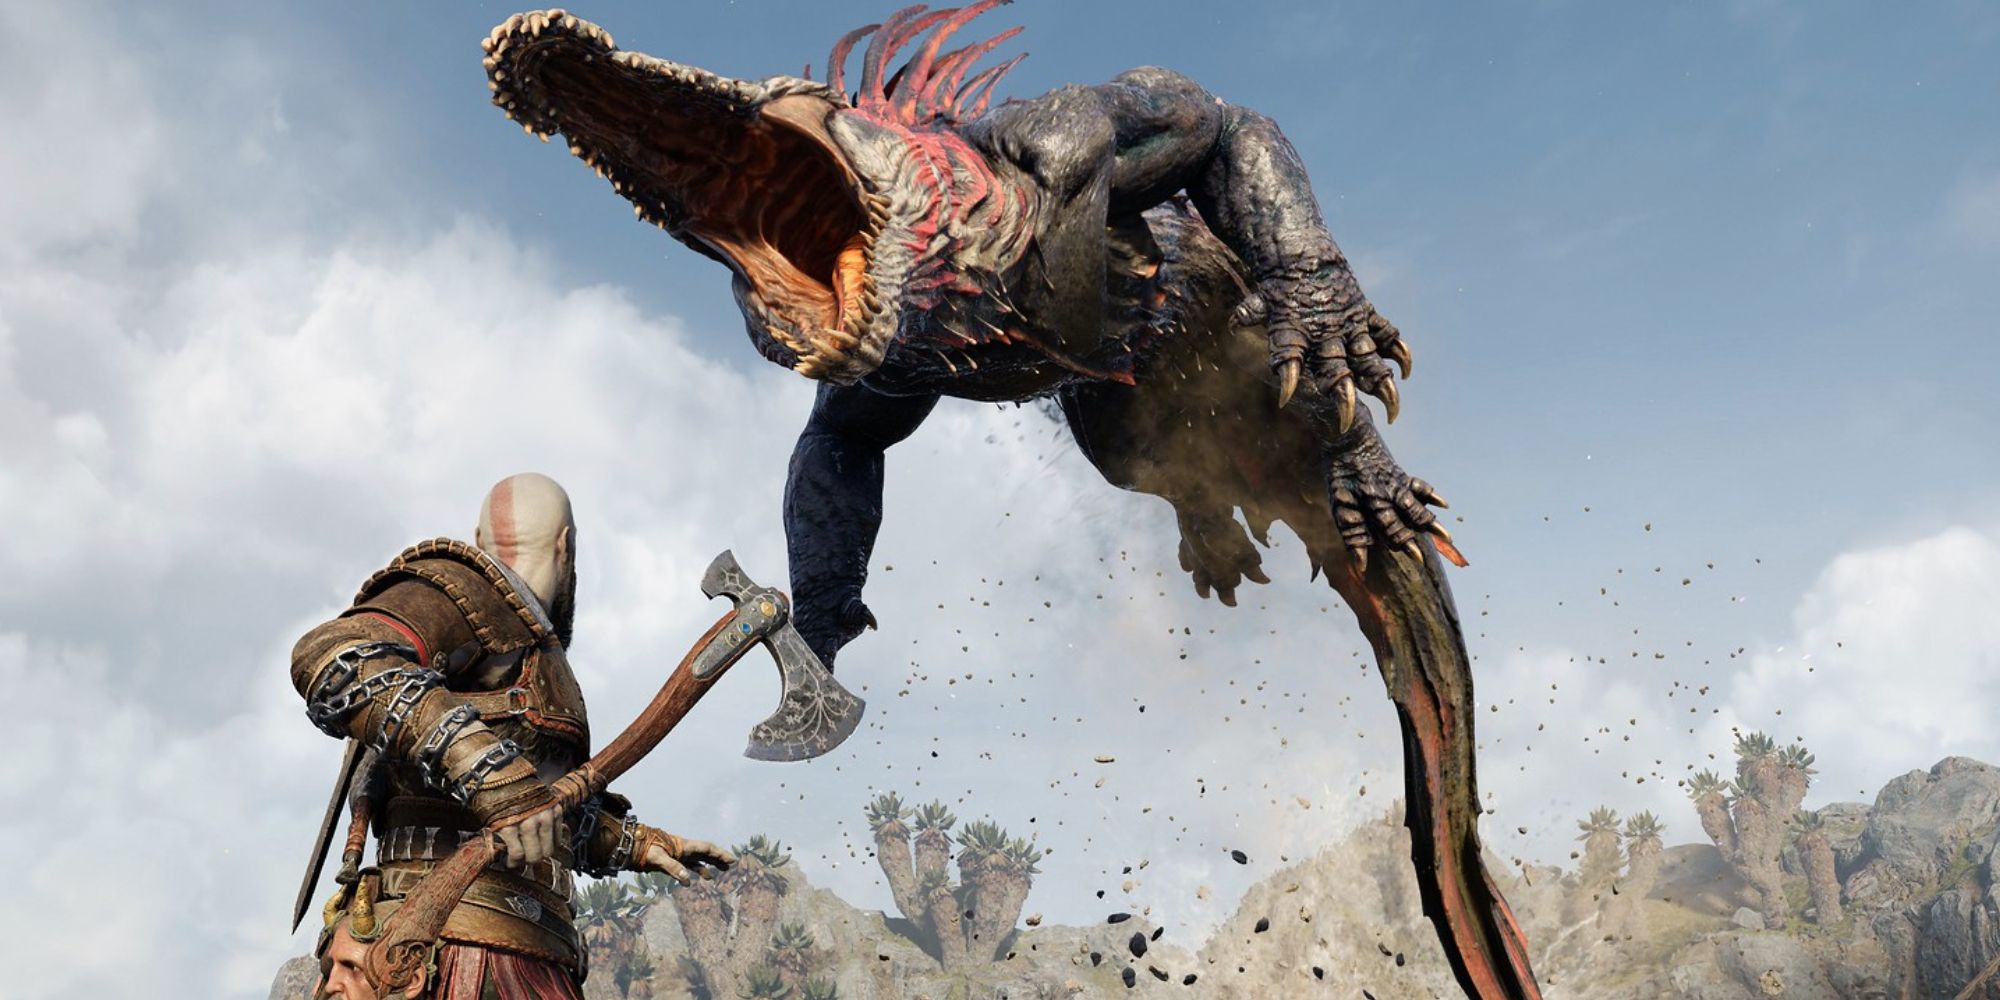 Kratos fights a giant electric crocodile Mini Boss in God of War Ragnarok